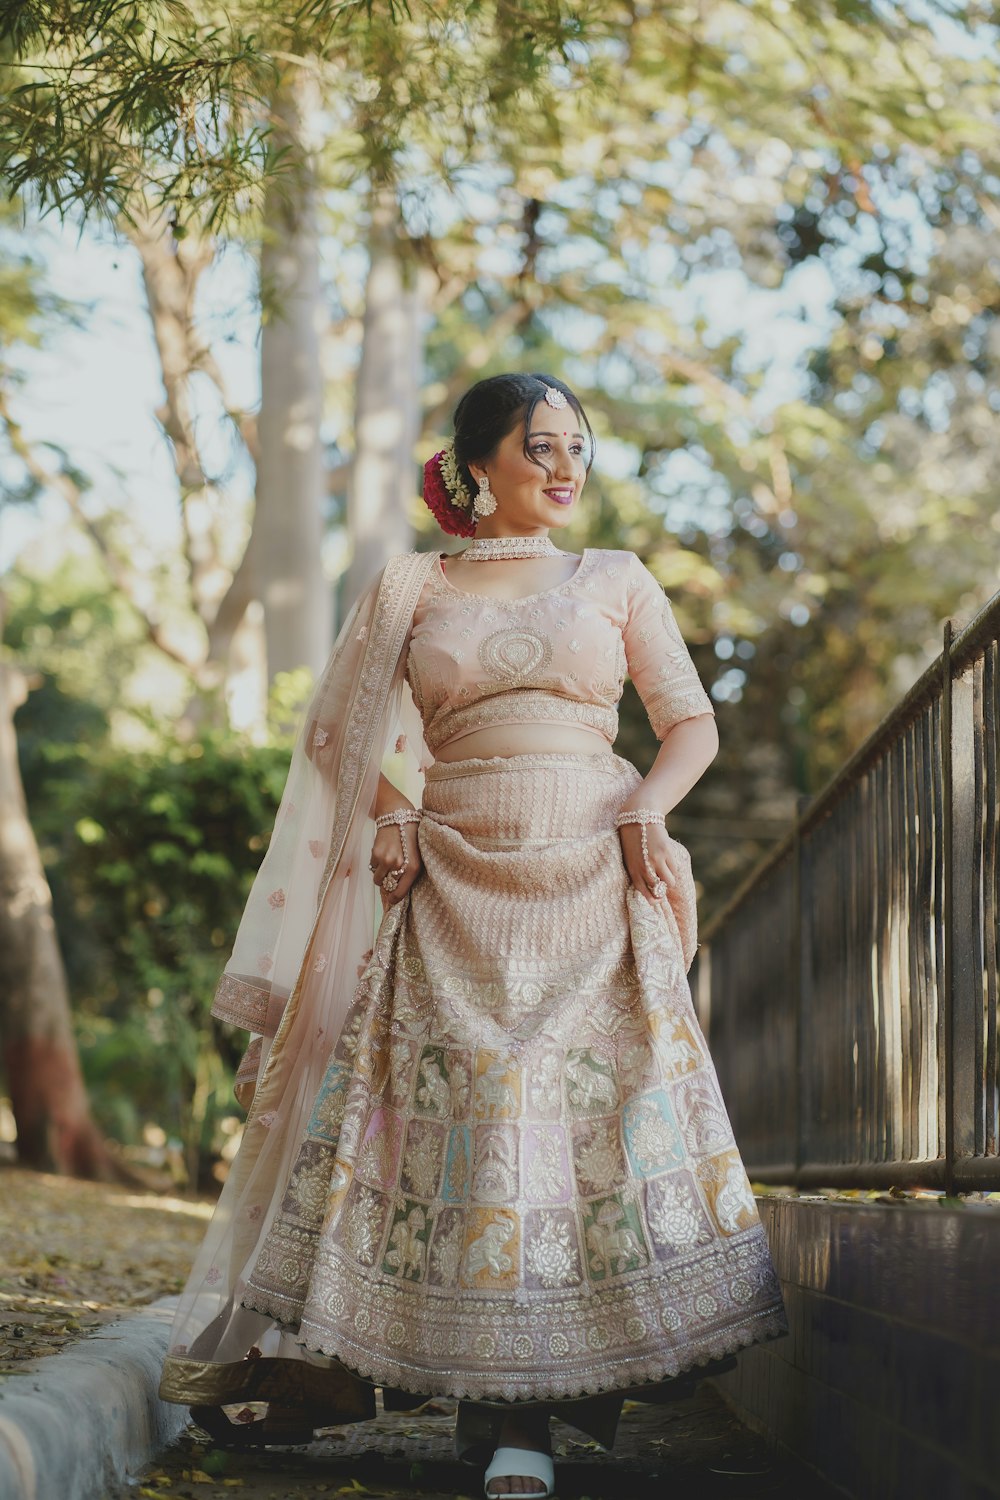 a woman in a wedding dress standing on a bridge